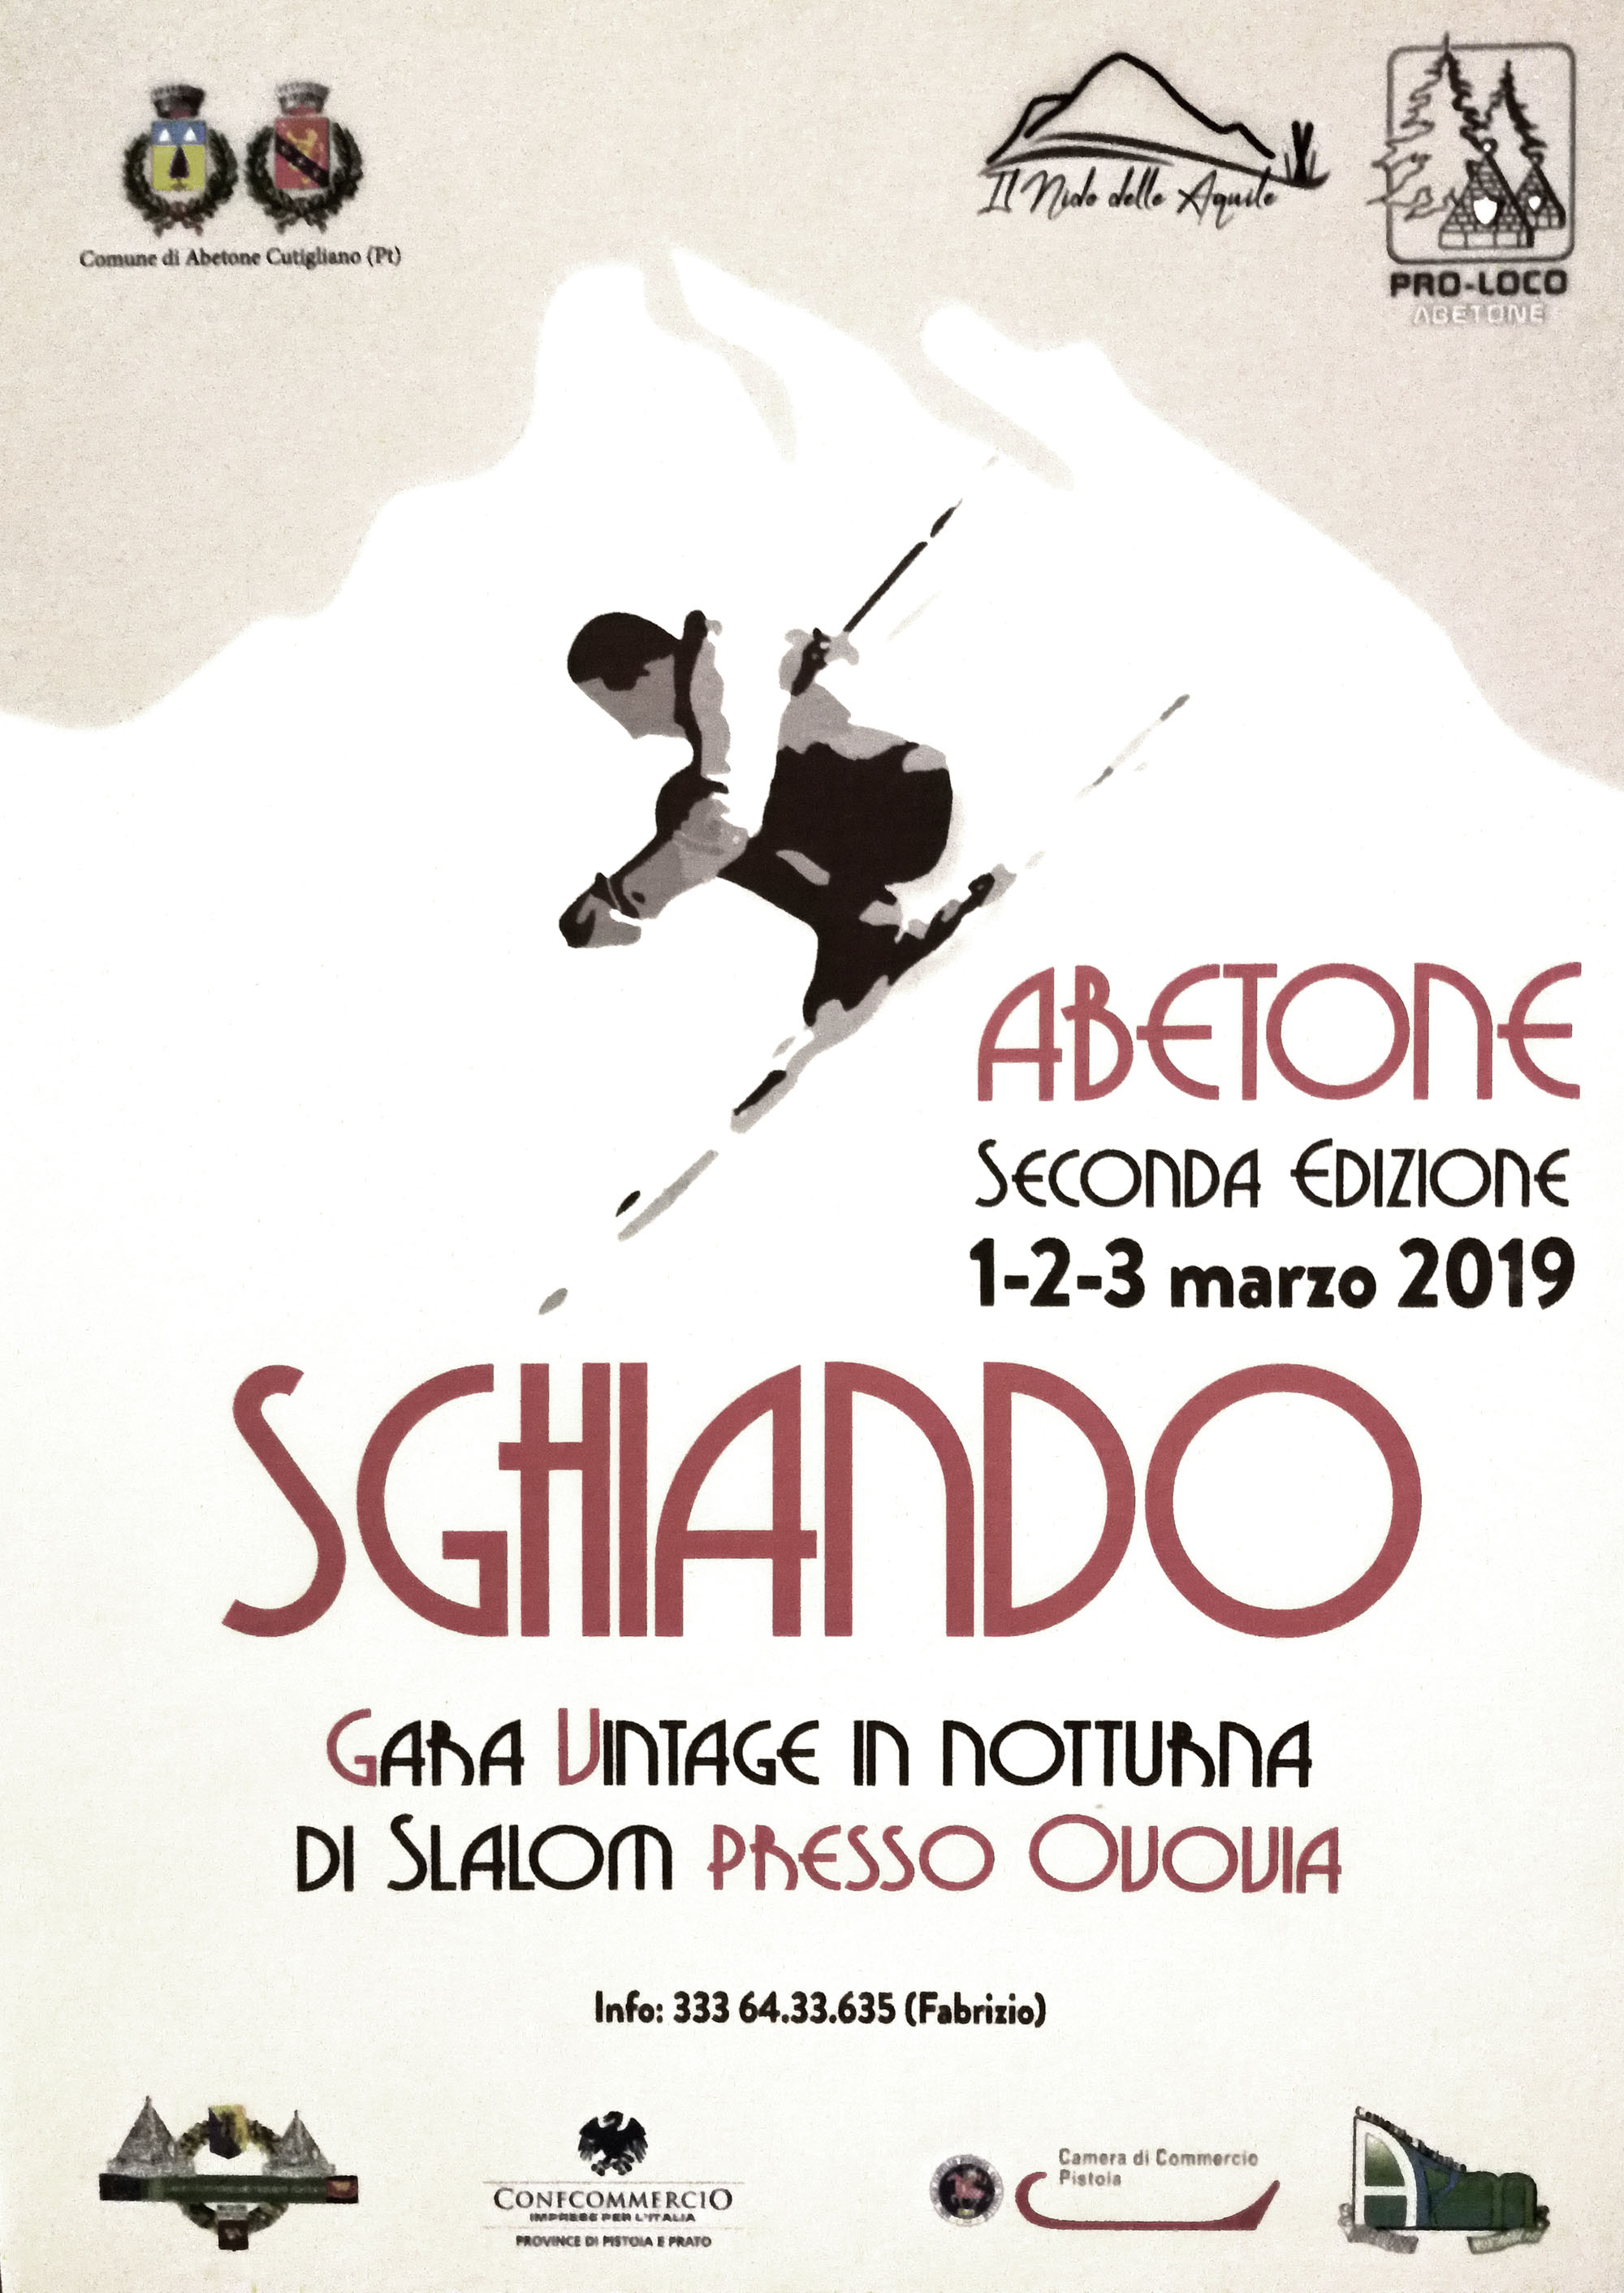 Toscana Italy Gara Vintage Slalom Abetone